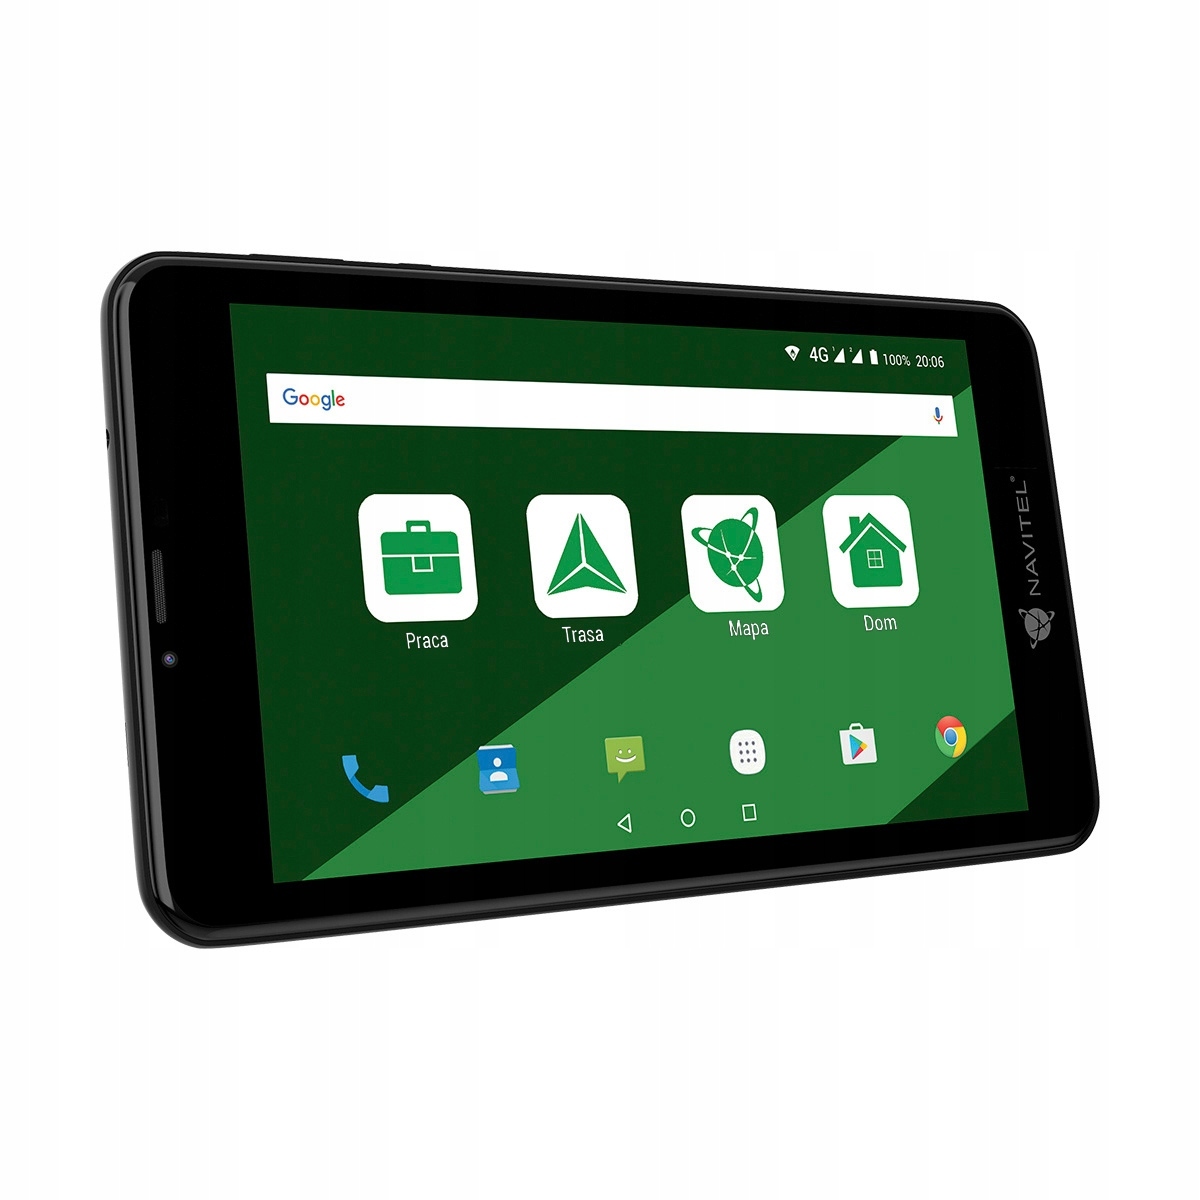 Navitel T757 LTE GPS Navigation Tablet